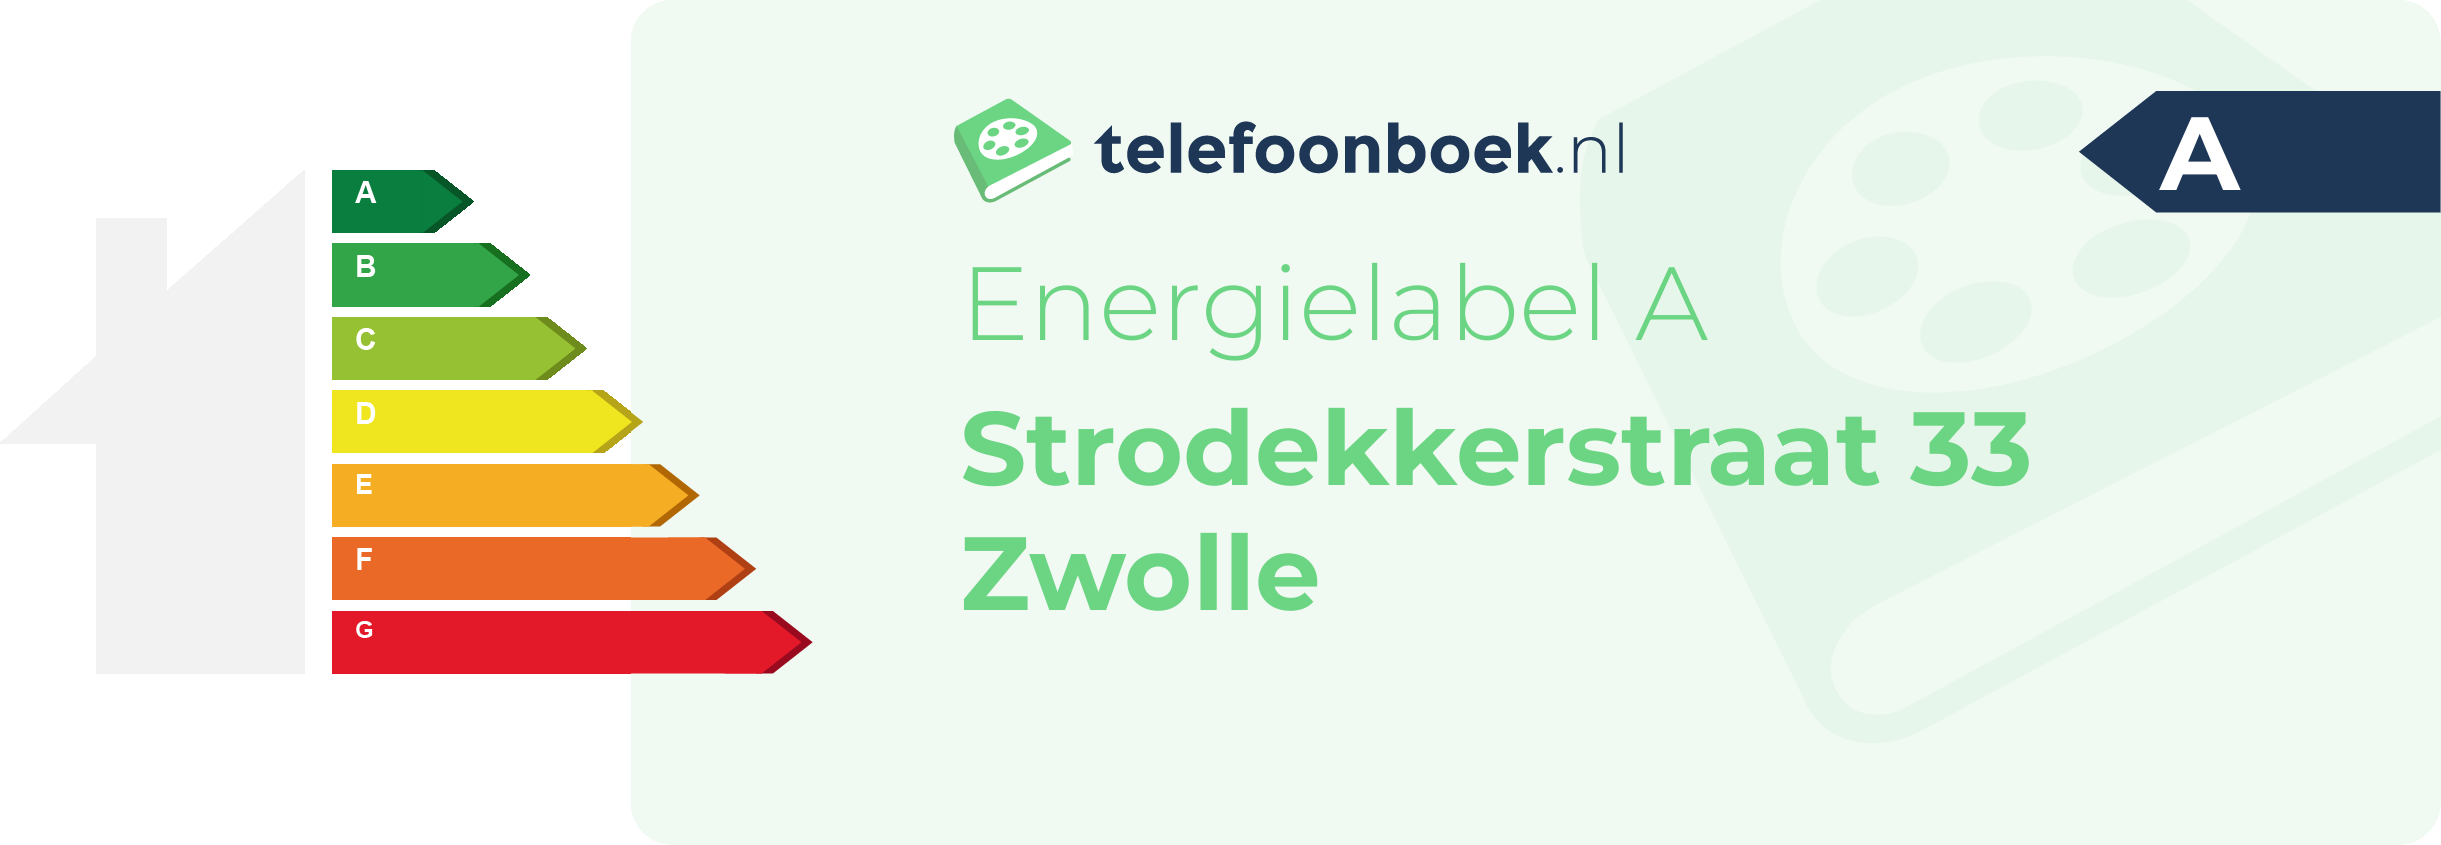 Energielabel Strodekkerstraat 33 Zwolle